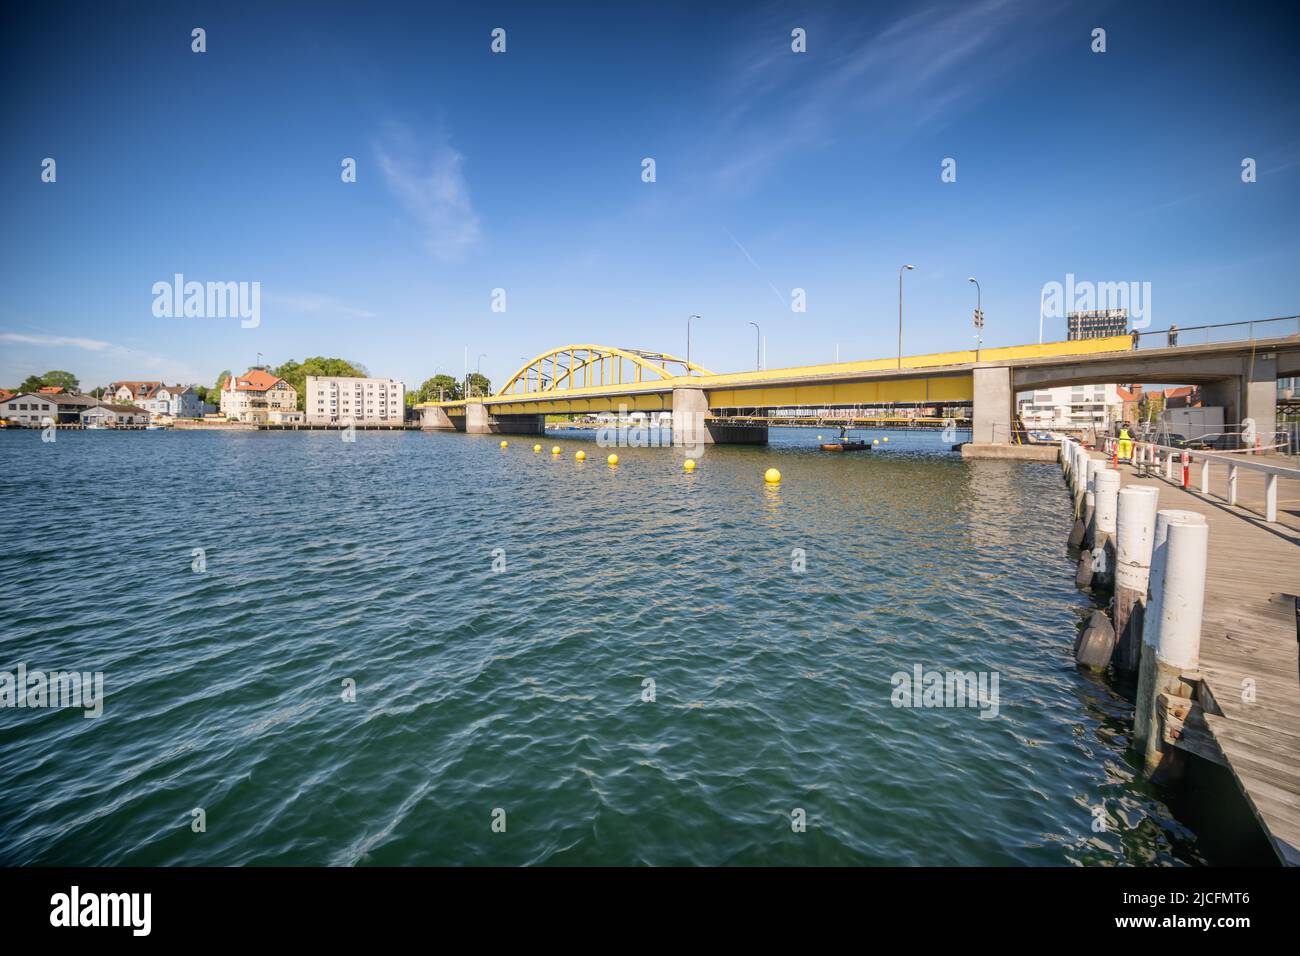 Sonderborg old bridge dressed up in yellow tour color, Denmark Stock Photo